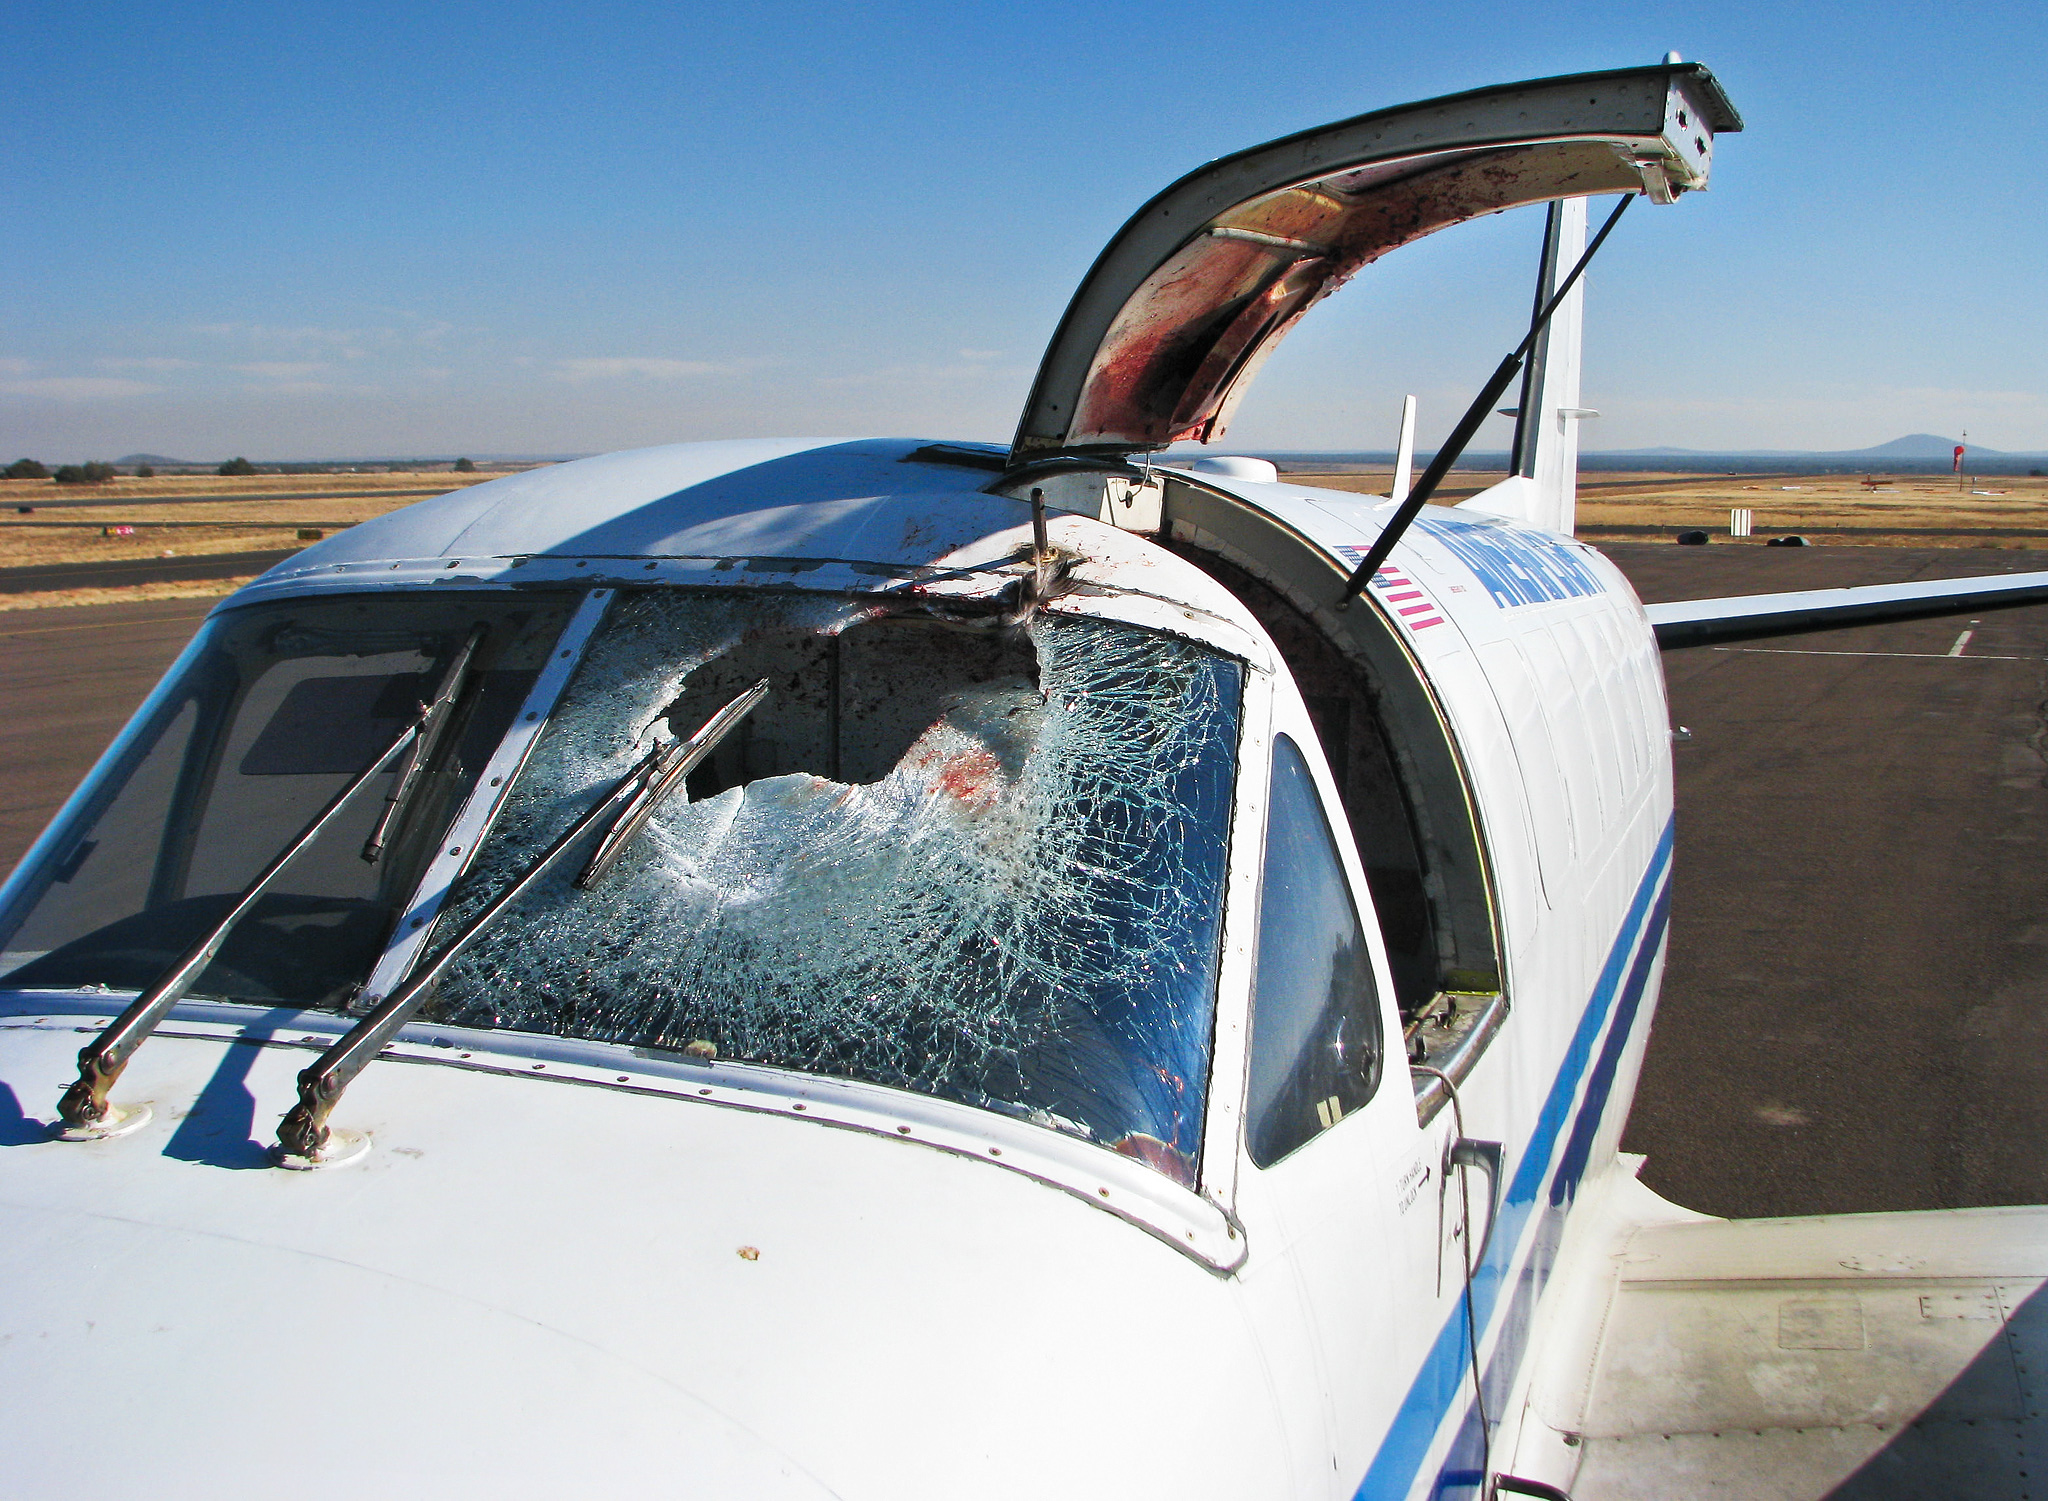 damage from bird crashing into cockpit windscreen